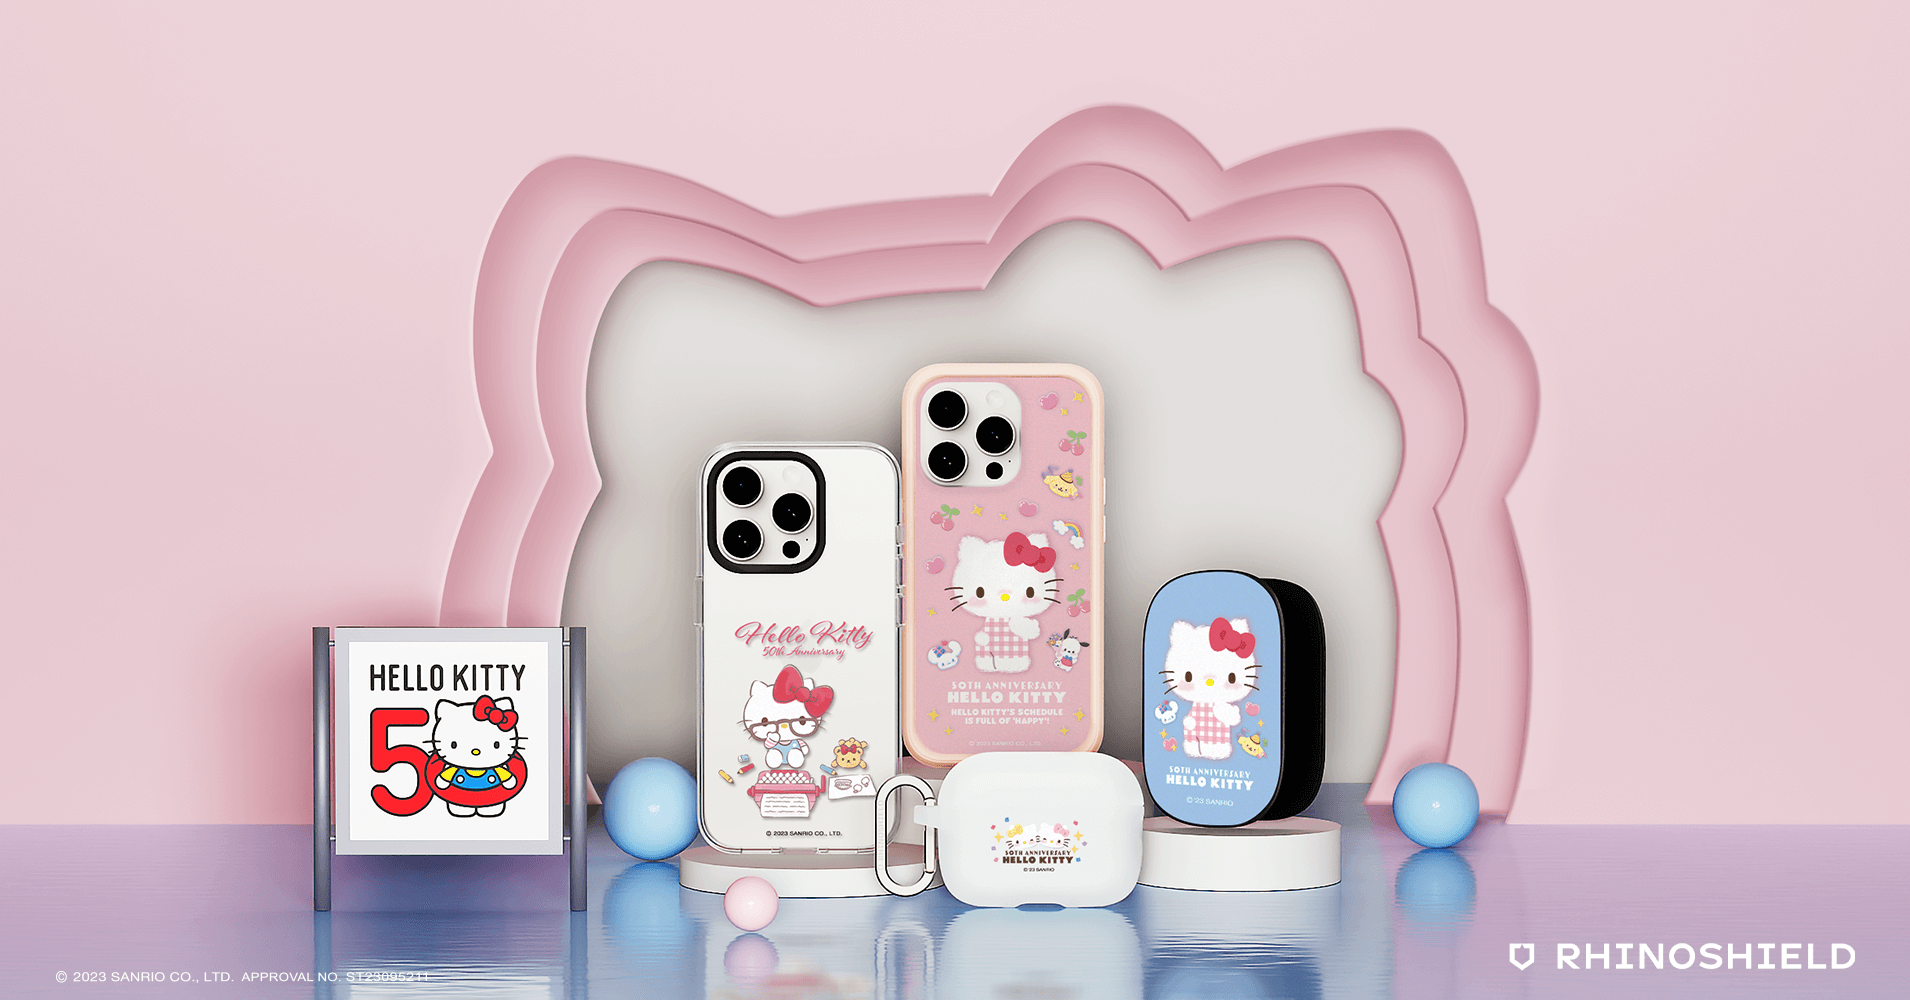 RHINOSHIELD 犀牛盾歡慶 Hello Kitty 50 週年推出一系列限定款手機殼與 3C 配件